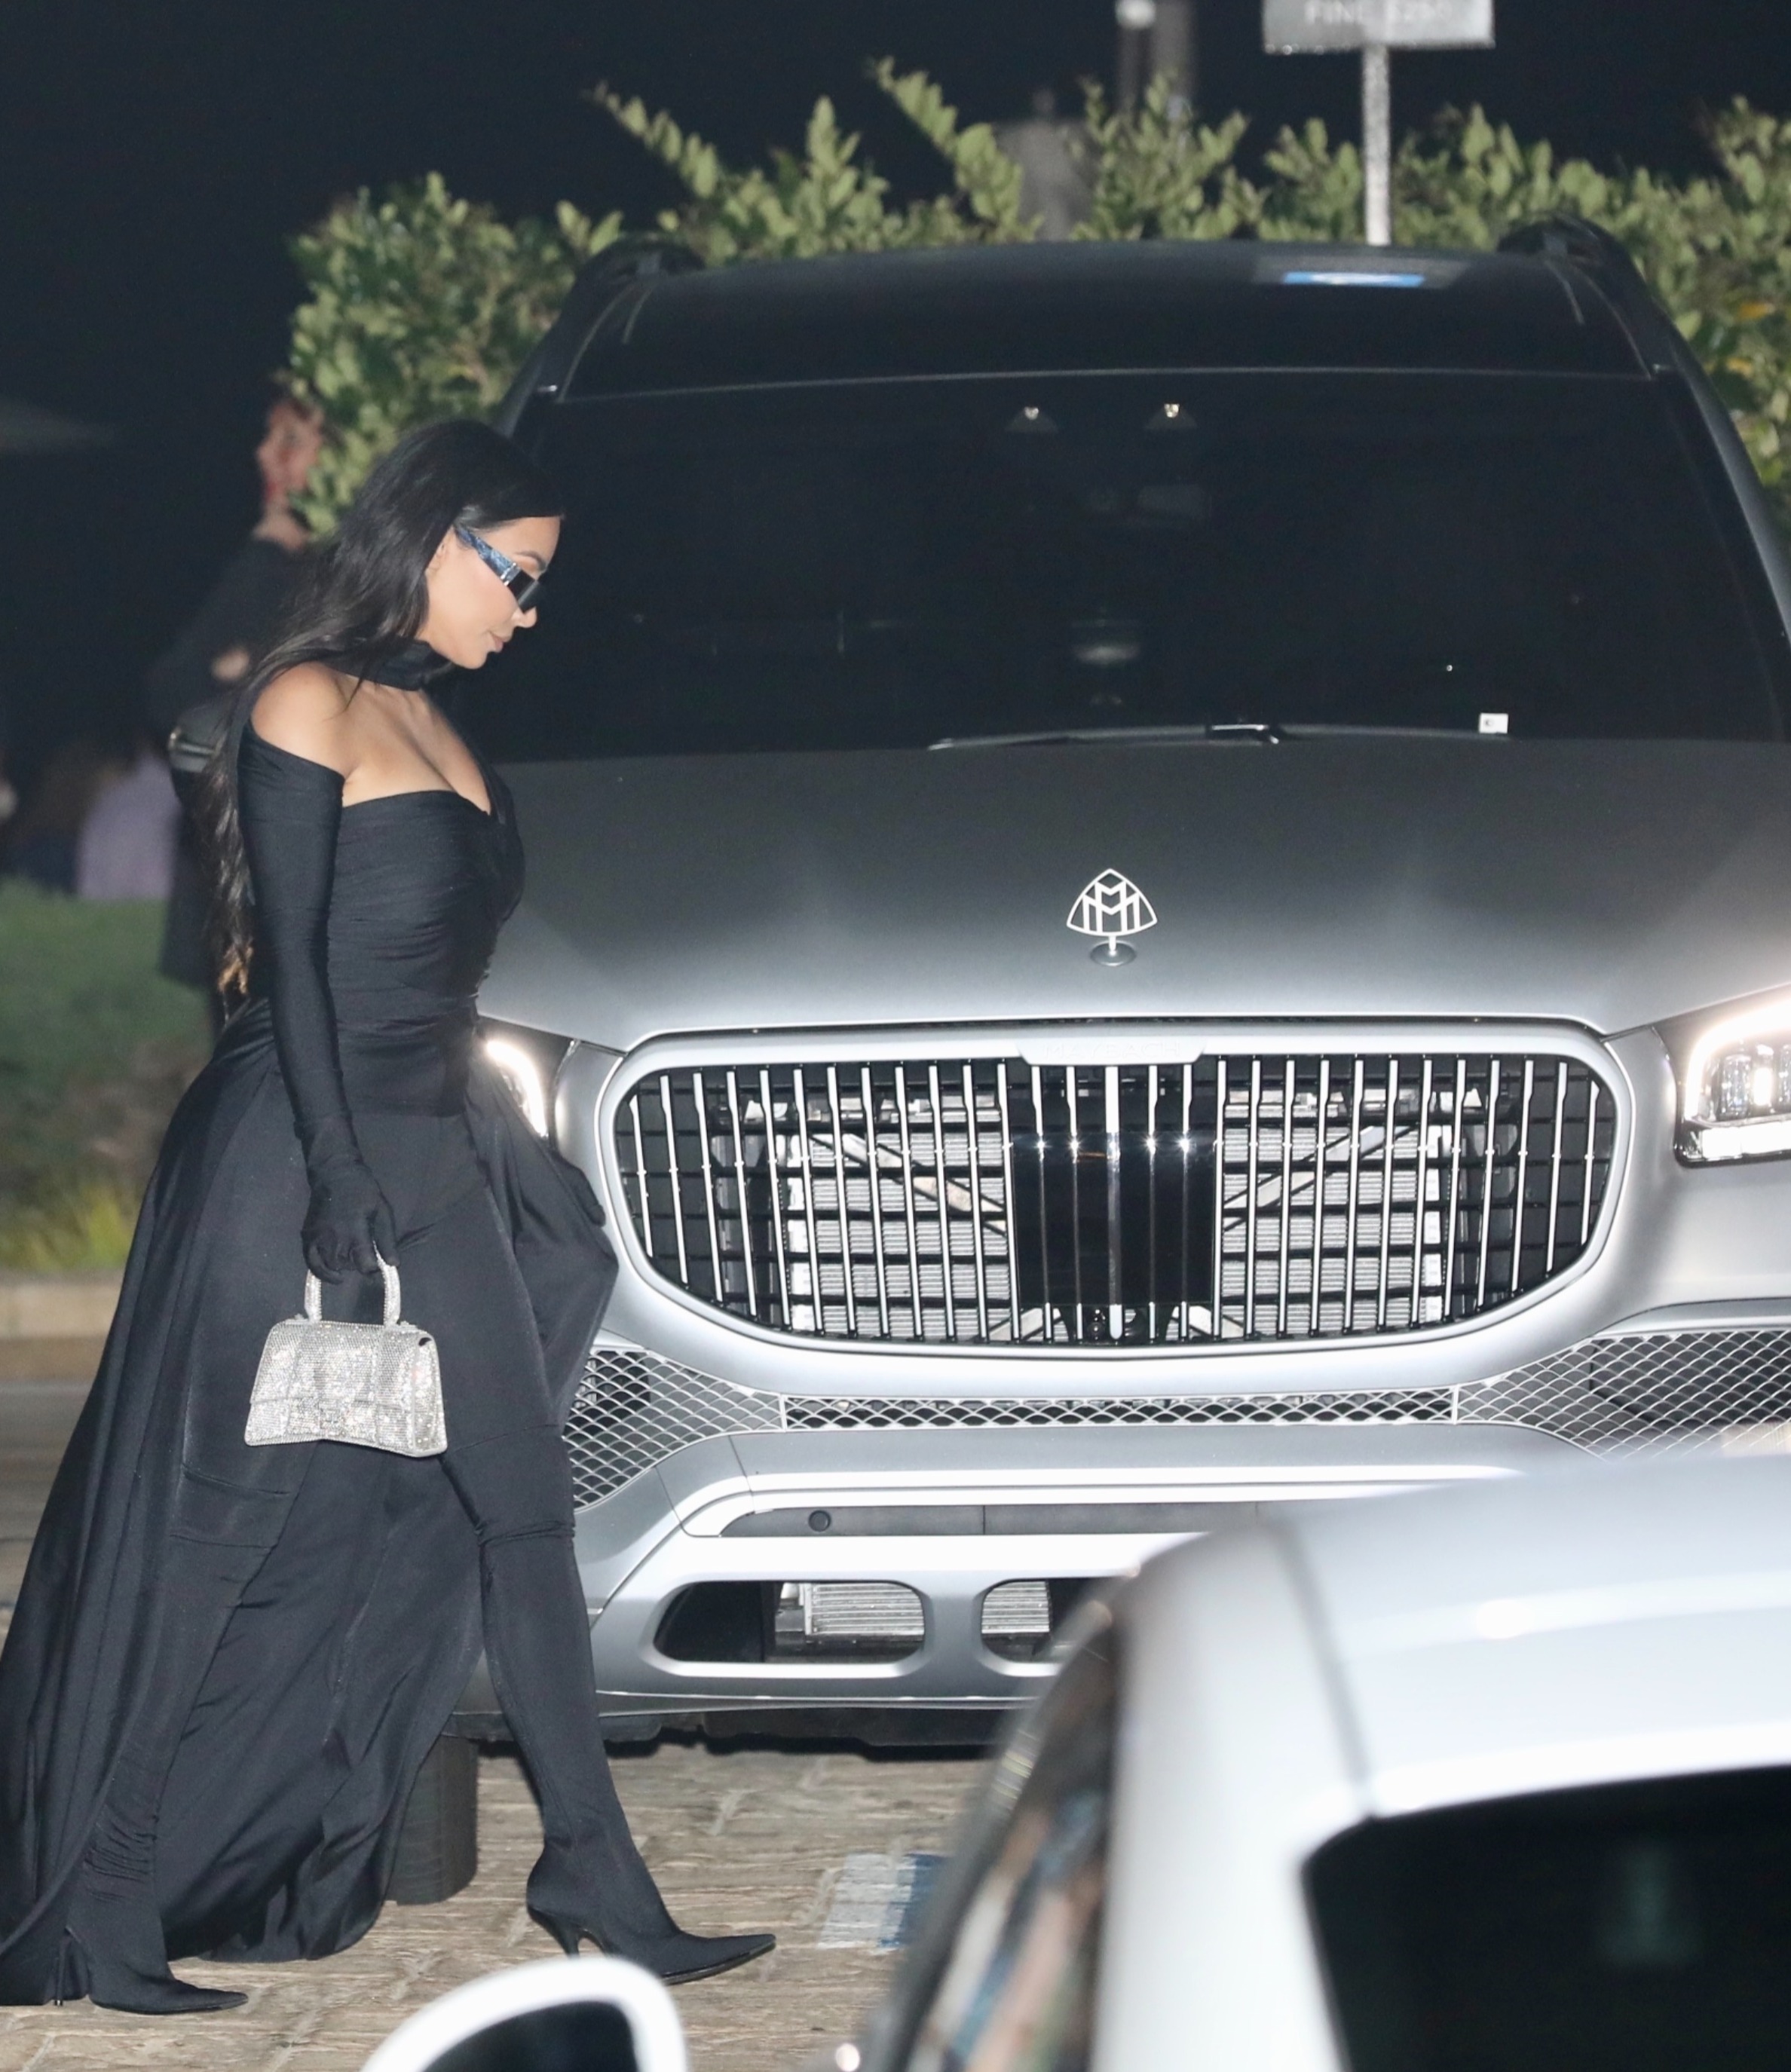 Kim Kardashian has amassed an $3.8M car collection